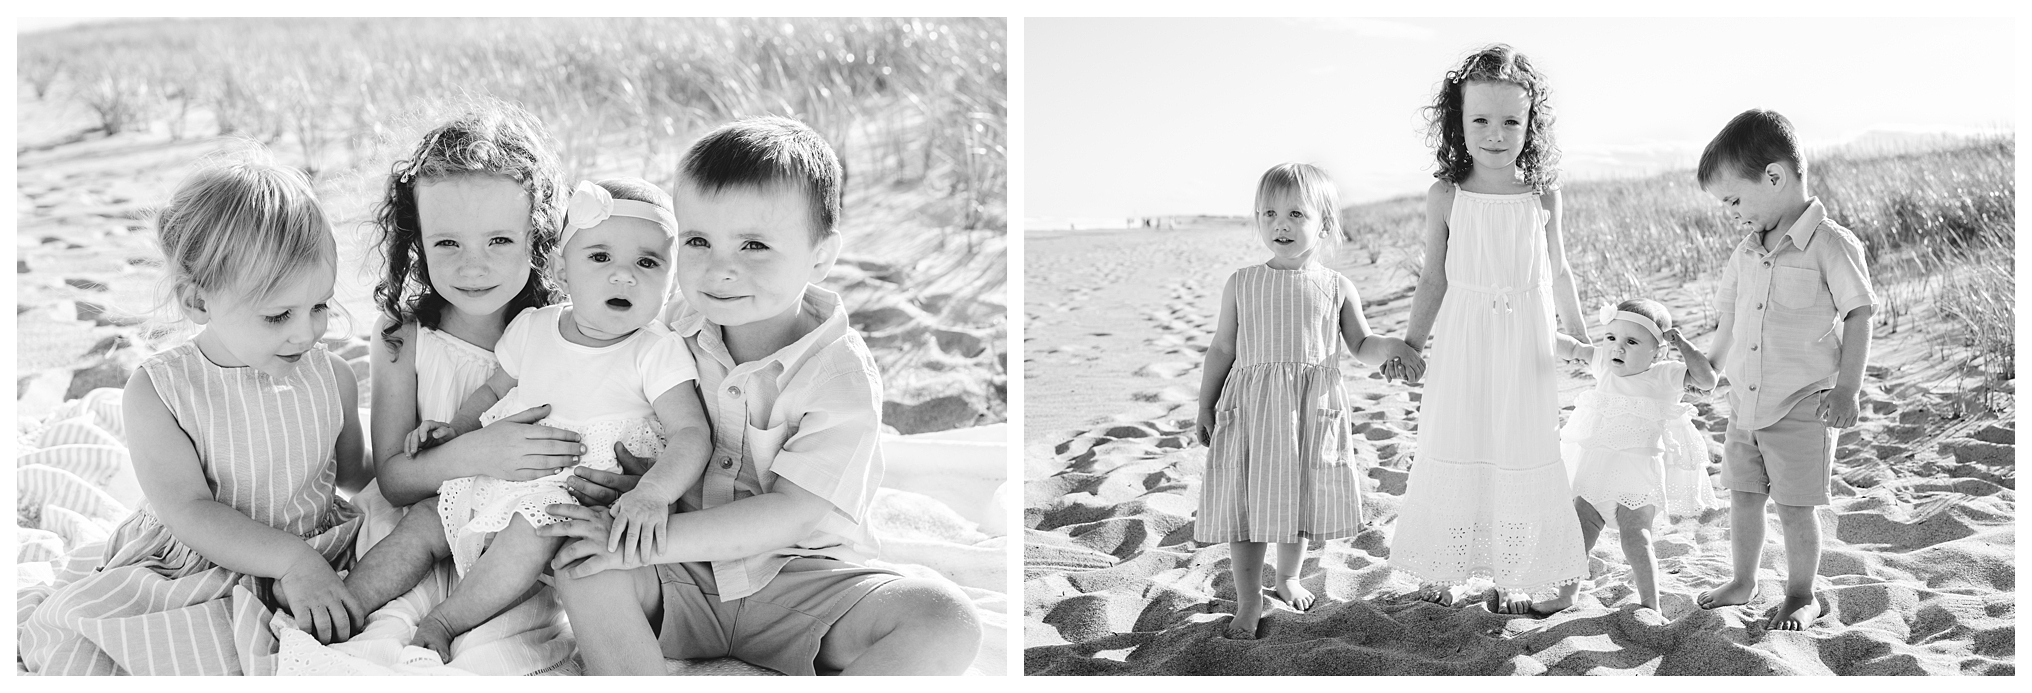 Beach-family-photography-Sweet-Light-Portraits002.jpg